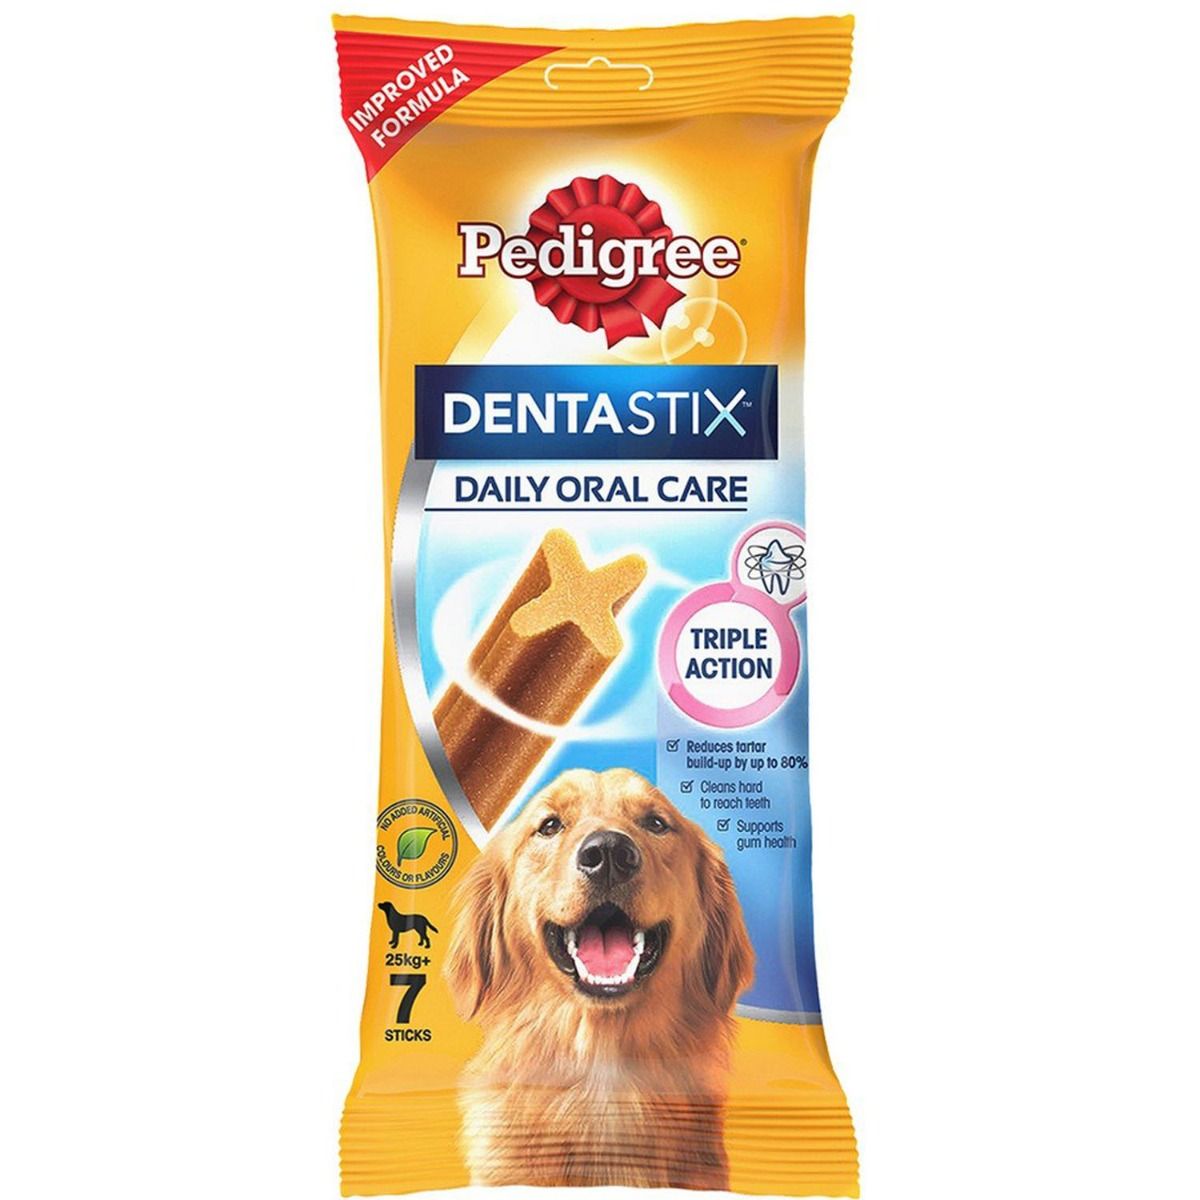 Pedigree Denta Stix Daily Oral Care, 270 gm, Pack of 1 